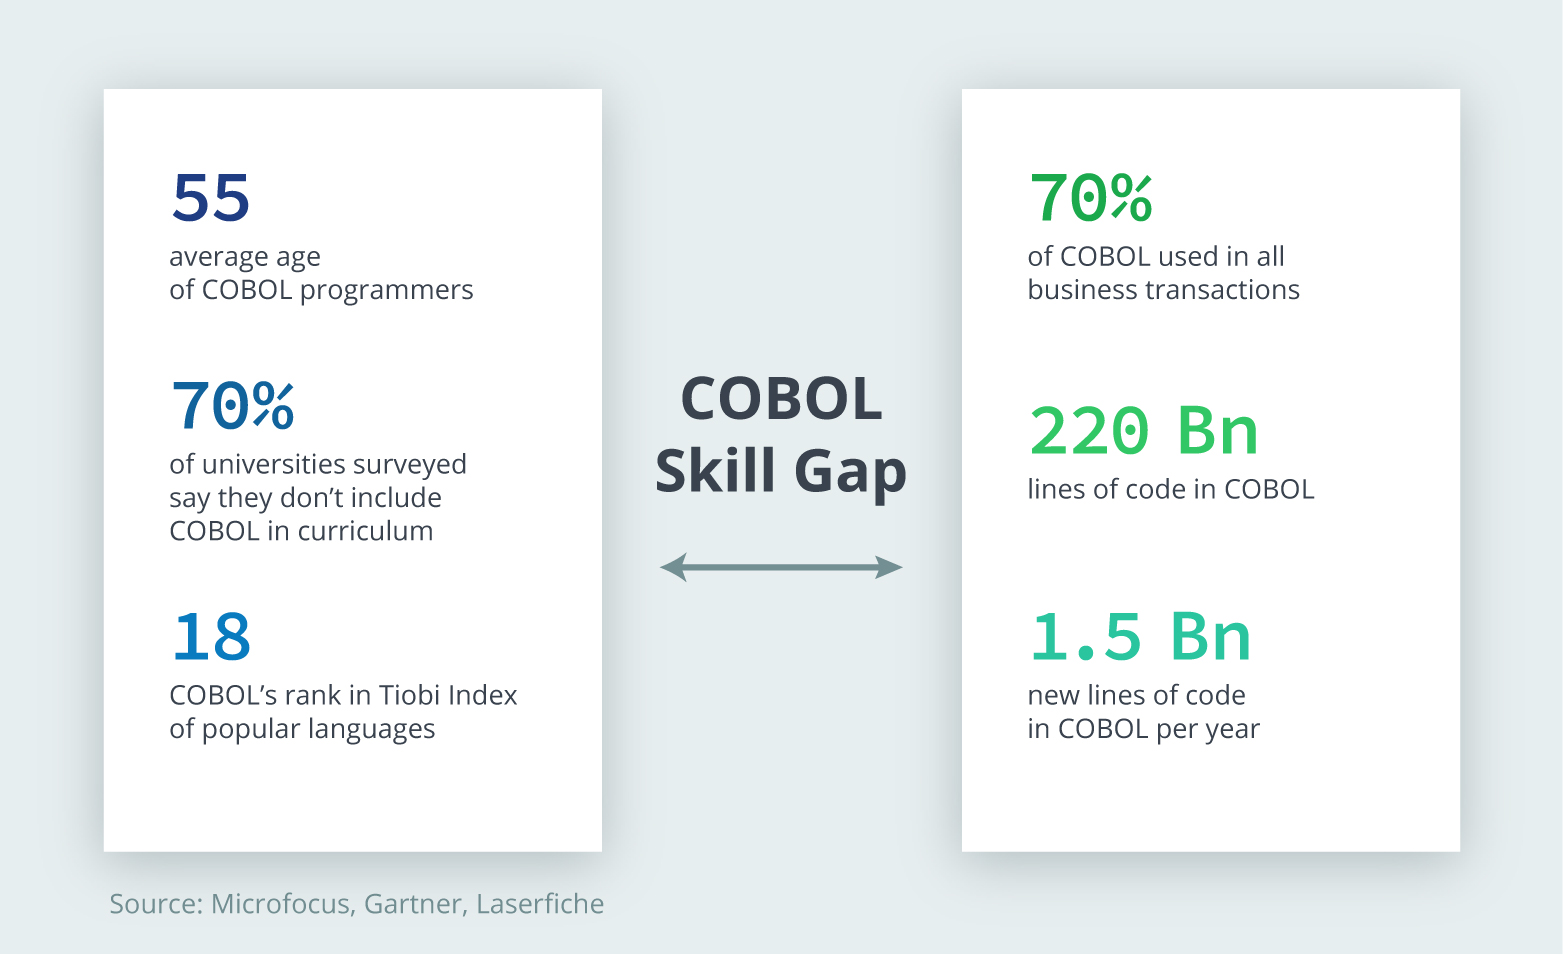 MicroFocus' data on skill gap in COBOL